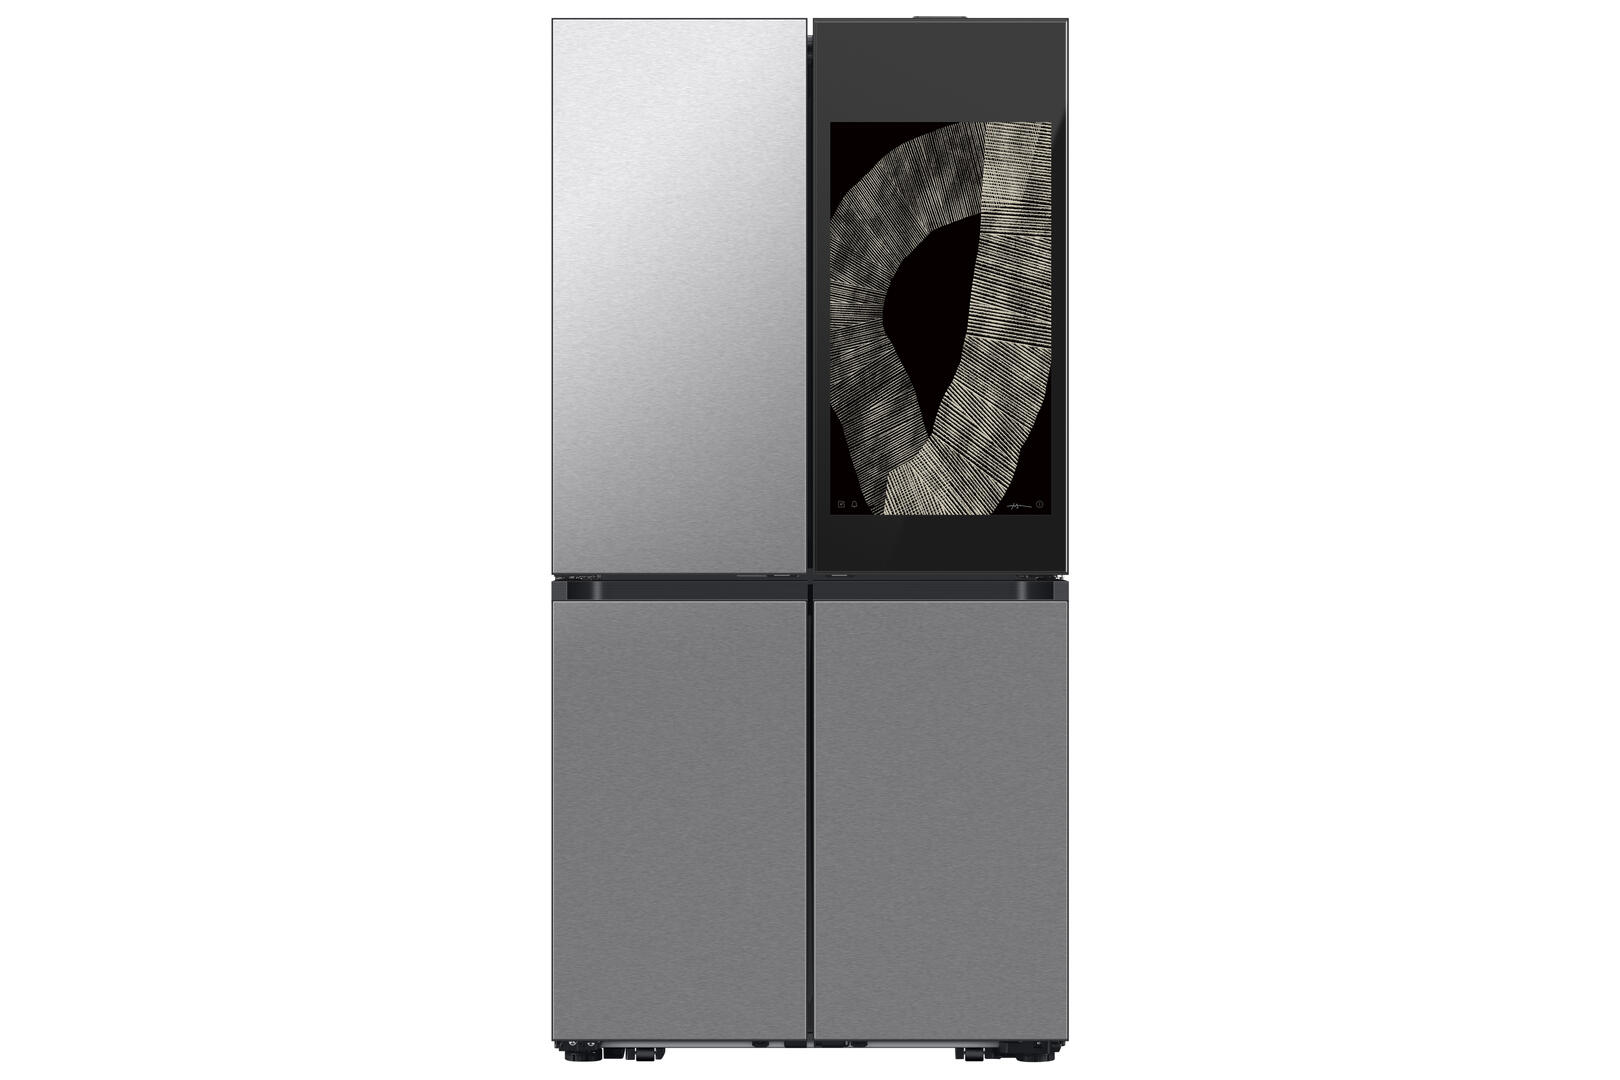 Samsung Launches Three New Refrigerators Featuring Next-Generation AI Inverter Compressor in India